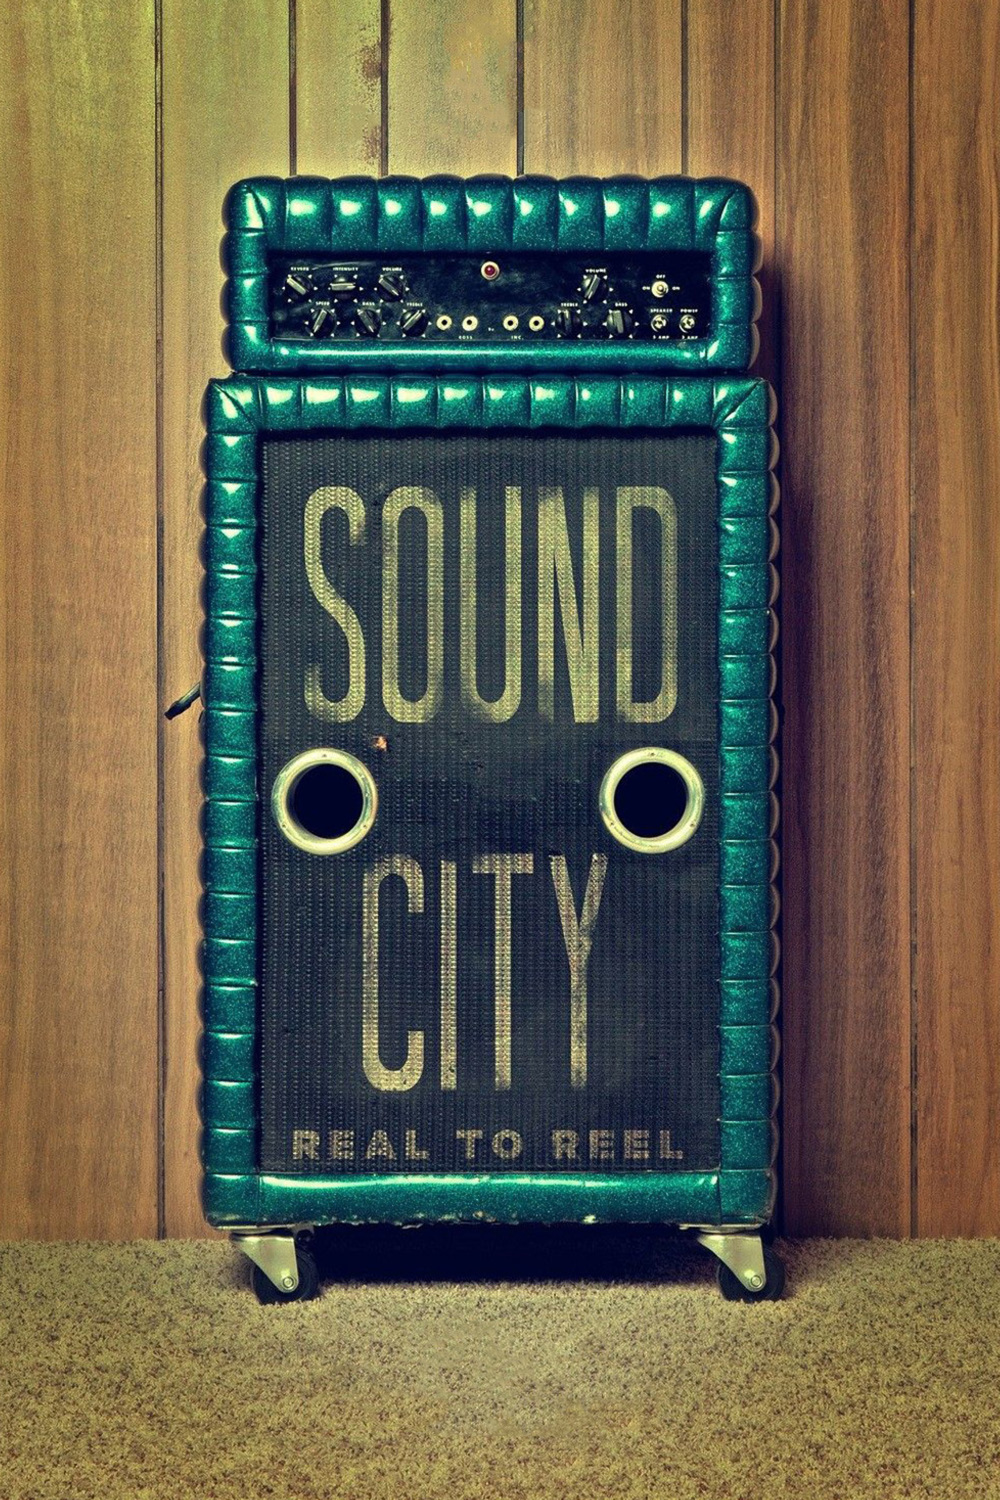 Sound City | Fandíme filmu